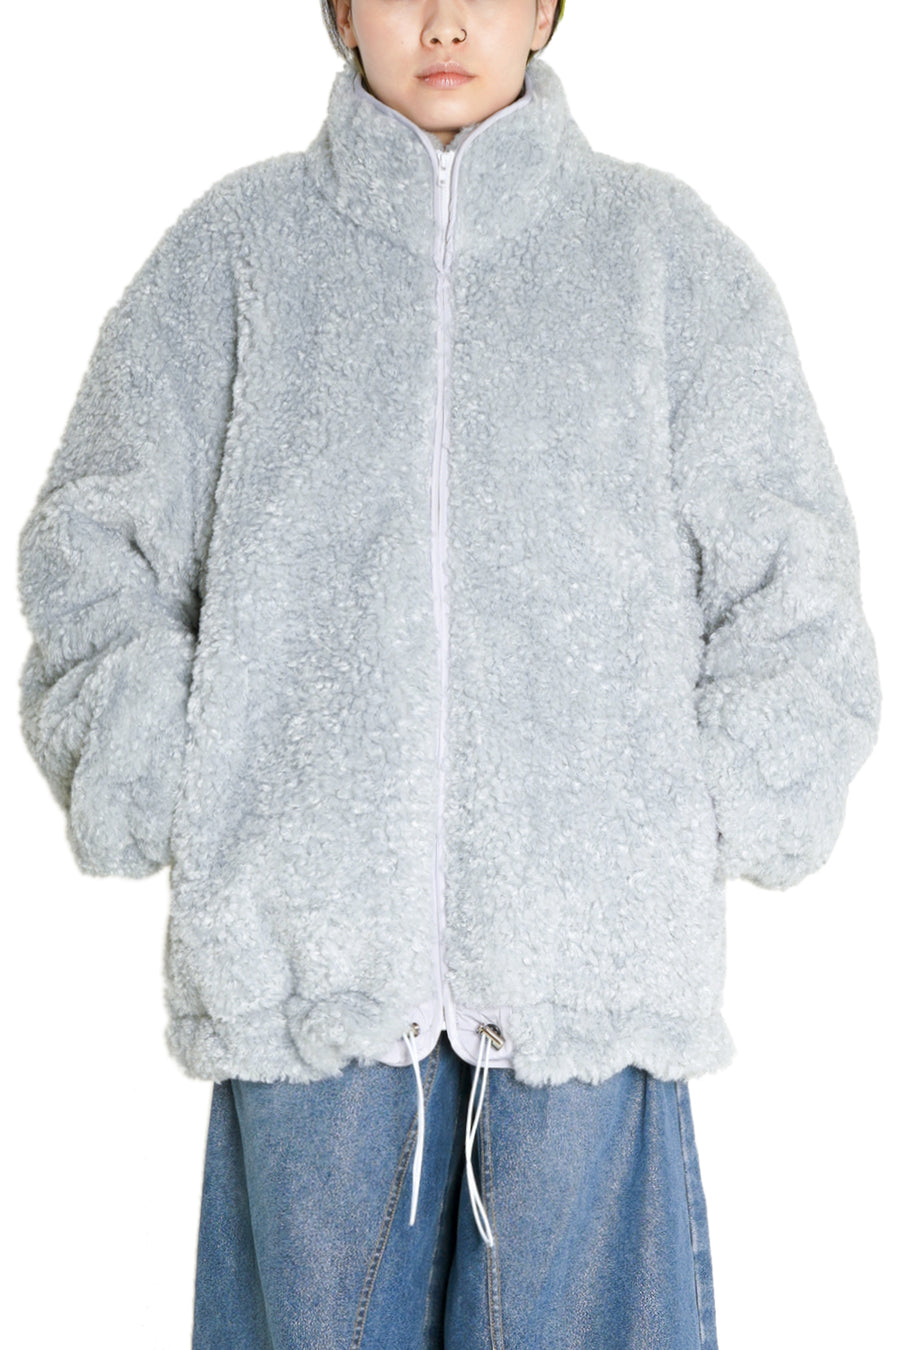 Ash Blue Oversized Faux-Shearling Zip Up Jacket